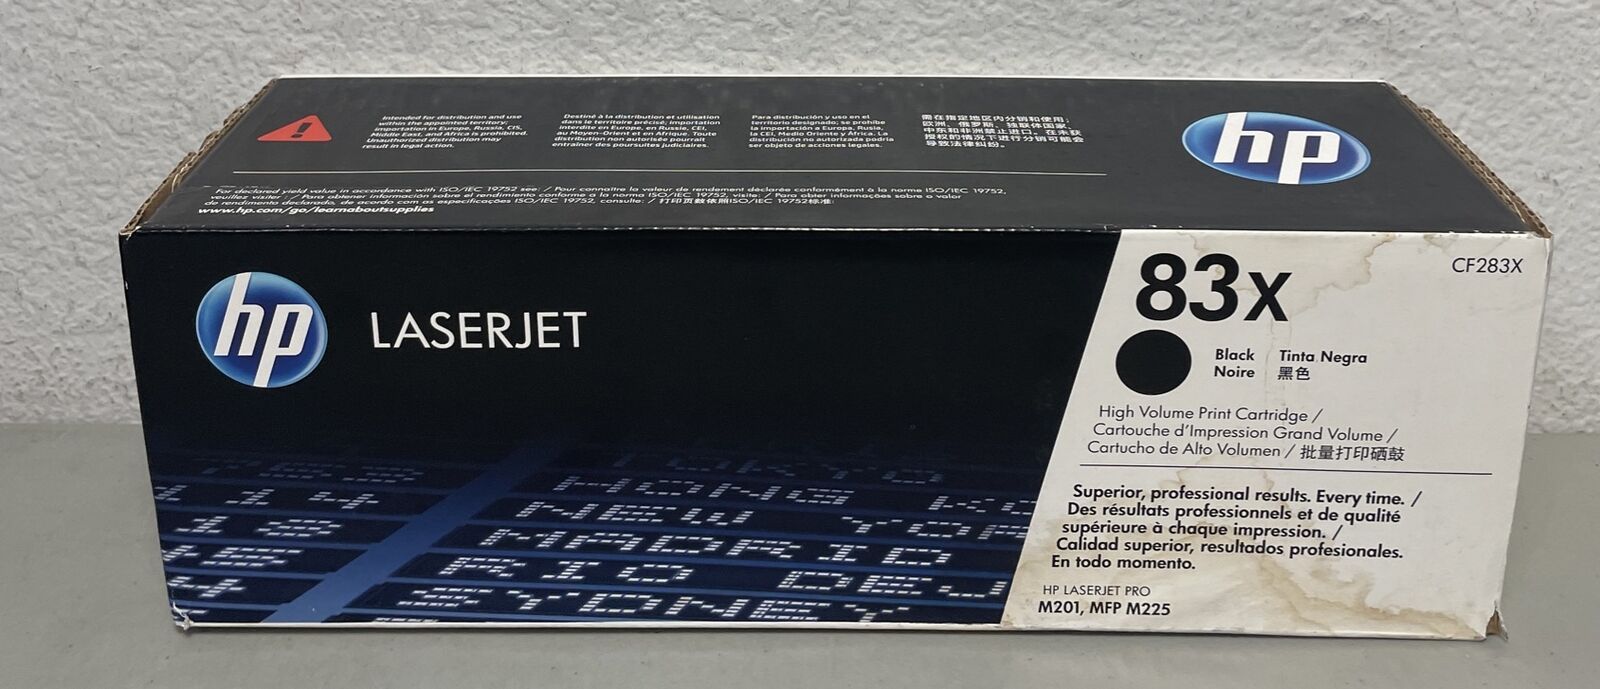 Genuine HP 83X Black High Volume Toner Cartridge CF283X - Box is Damaged